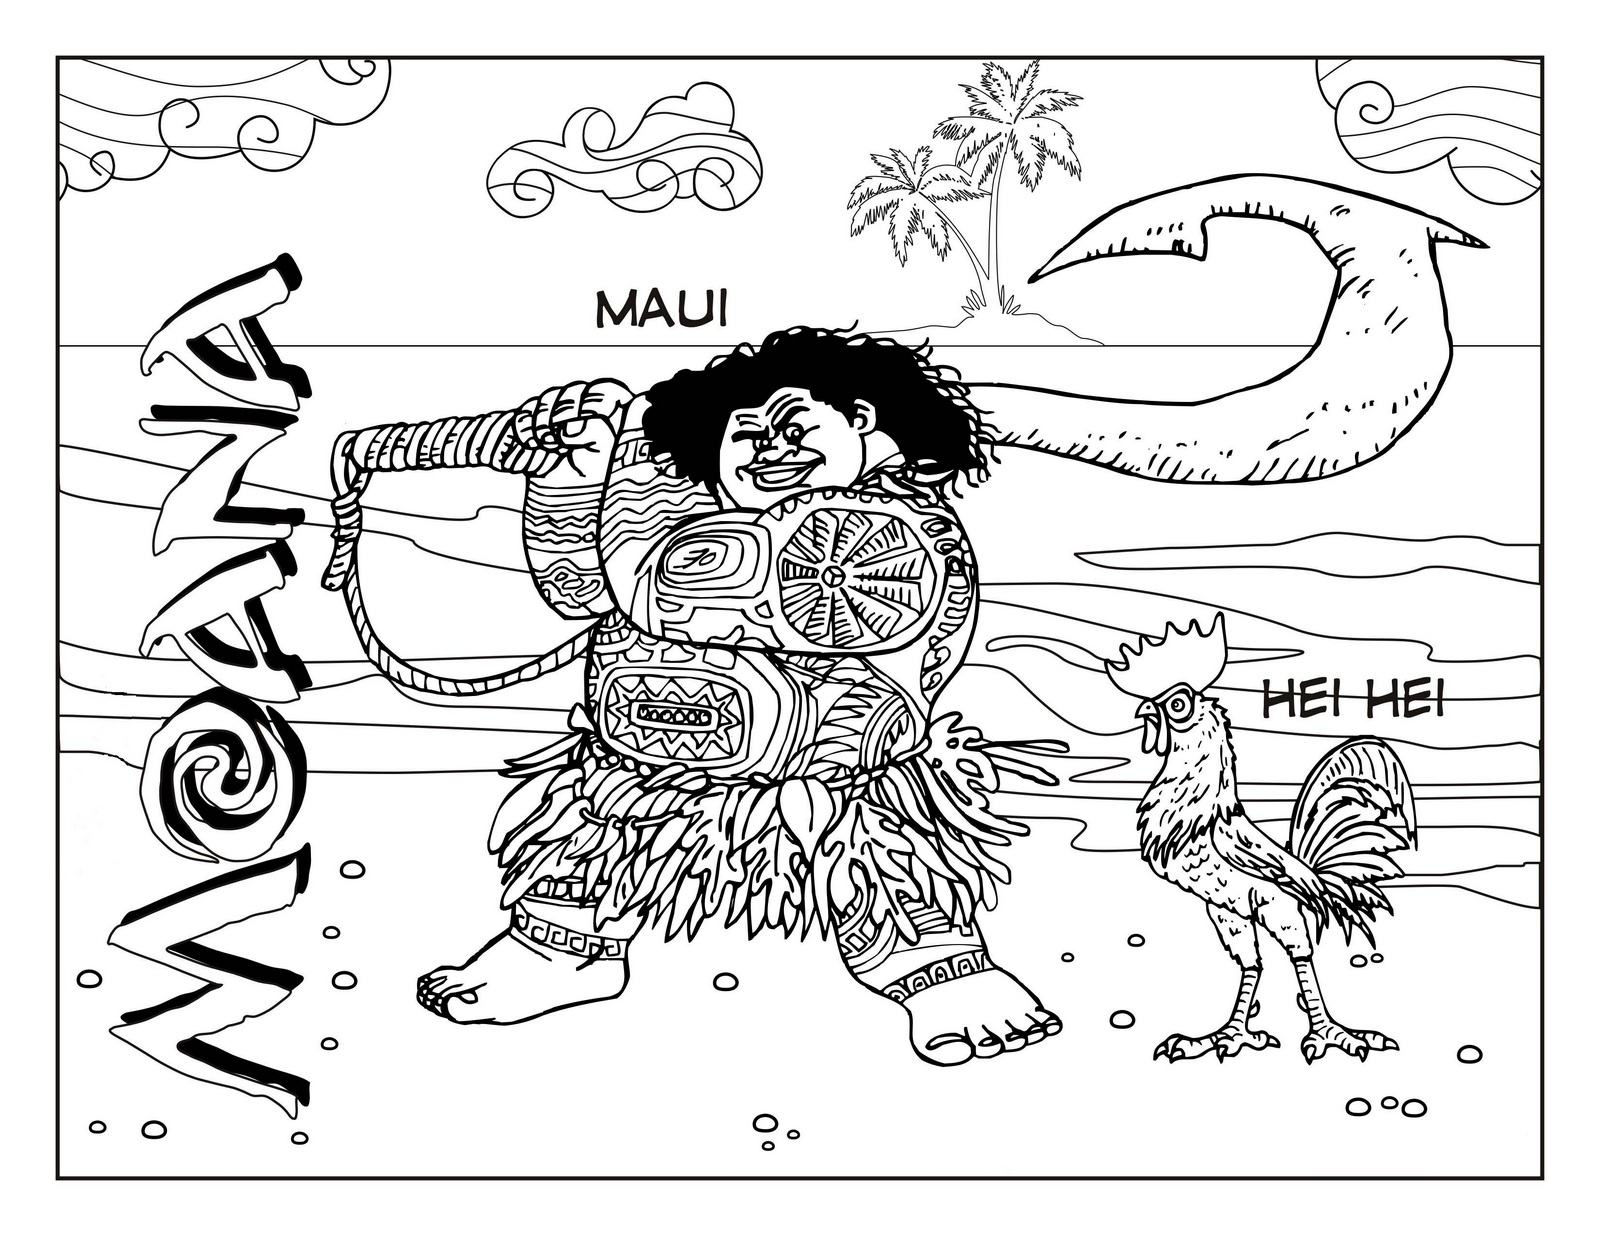 Disney Moana Maui Coloring Page